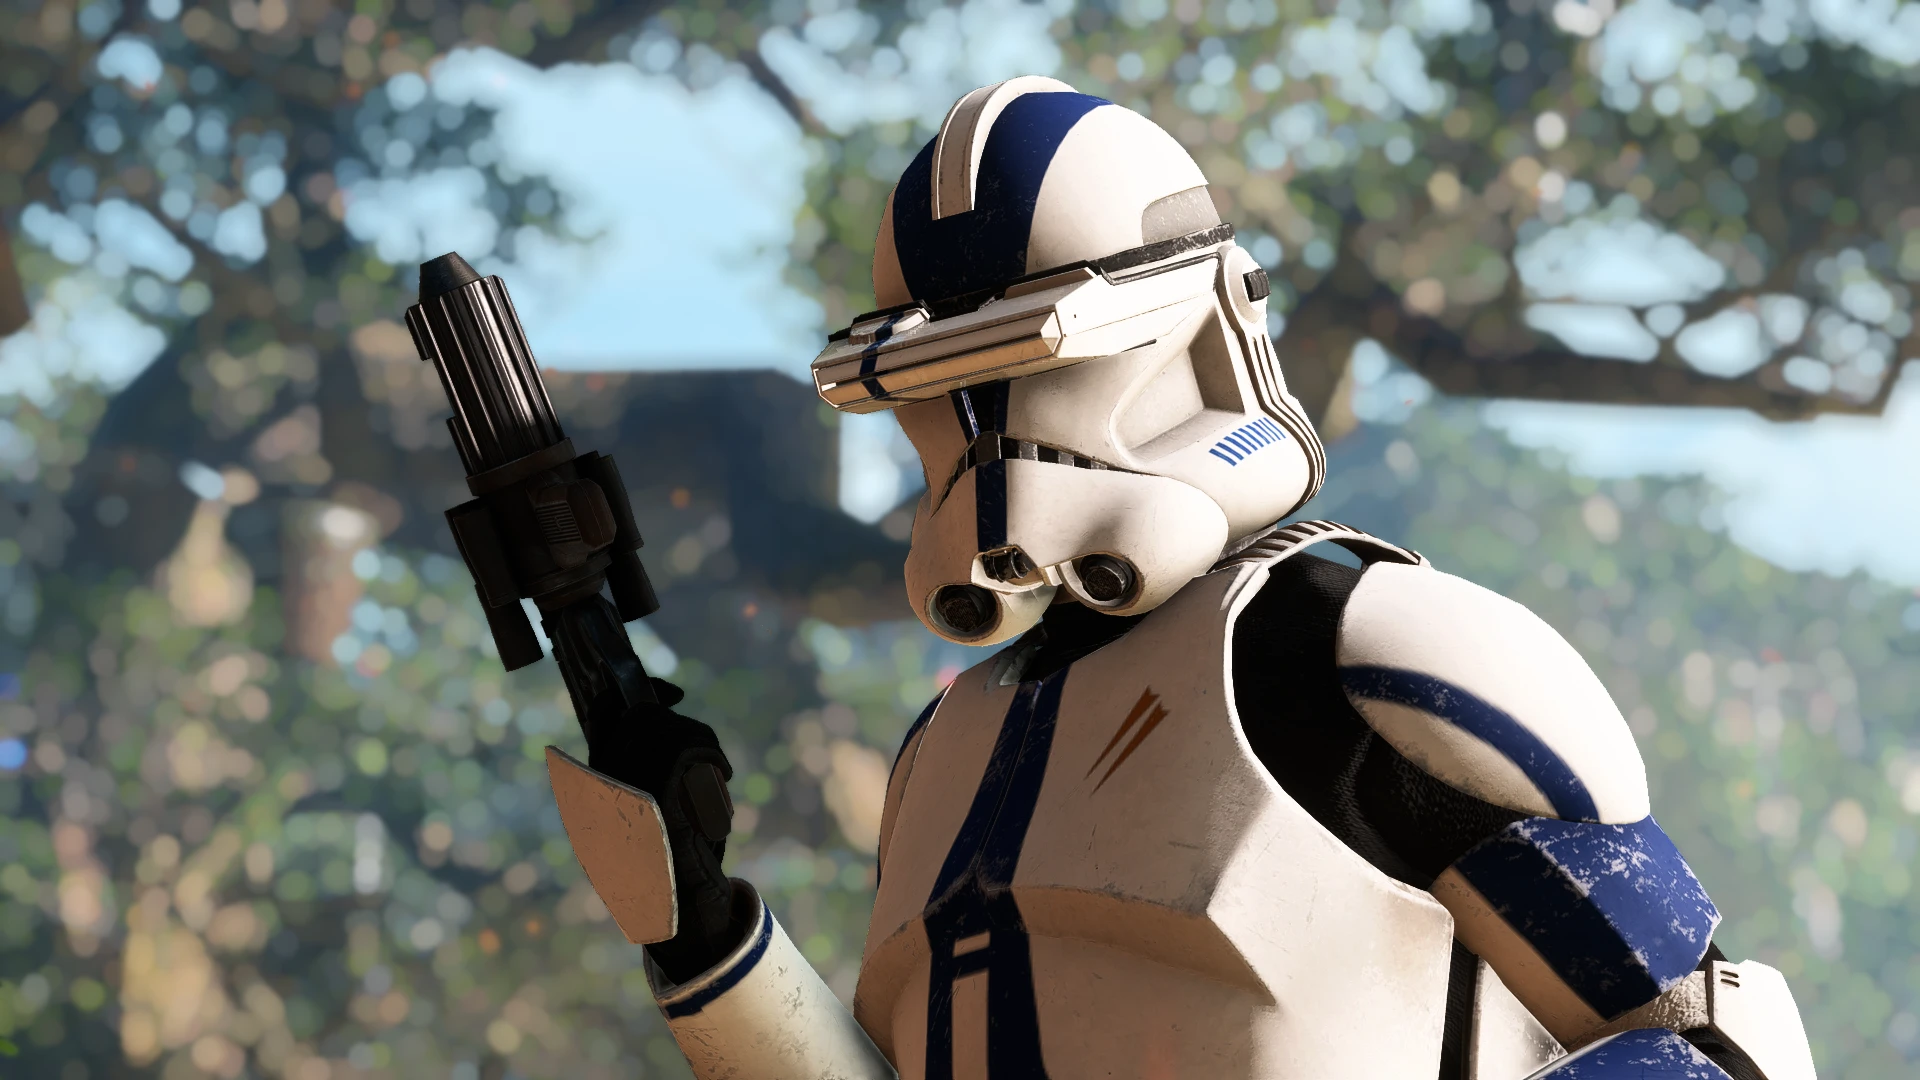 phase 3 star wars clone trooper